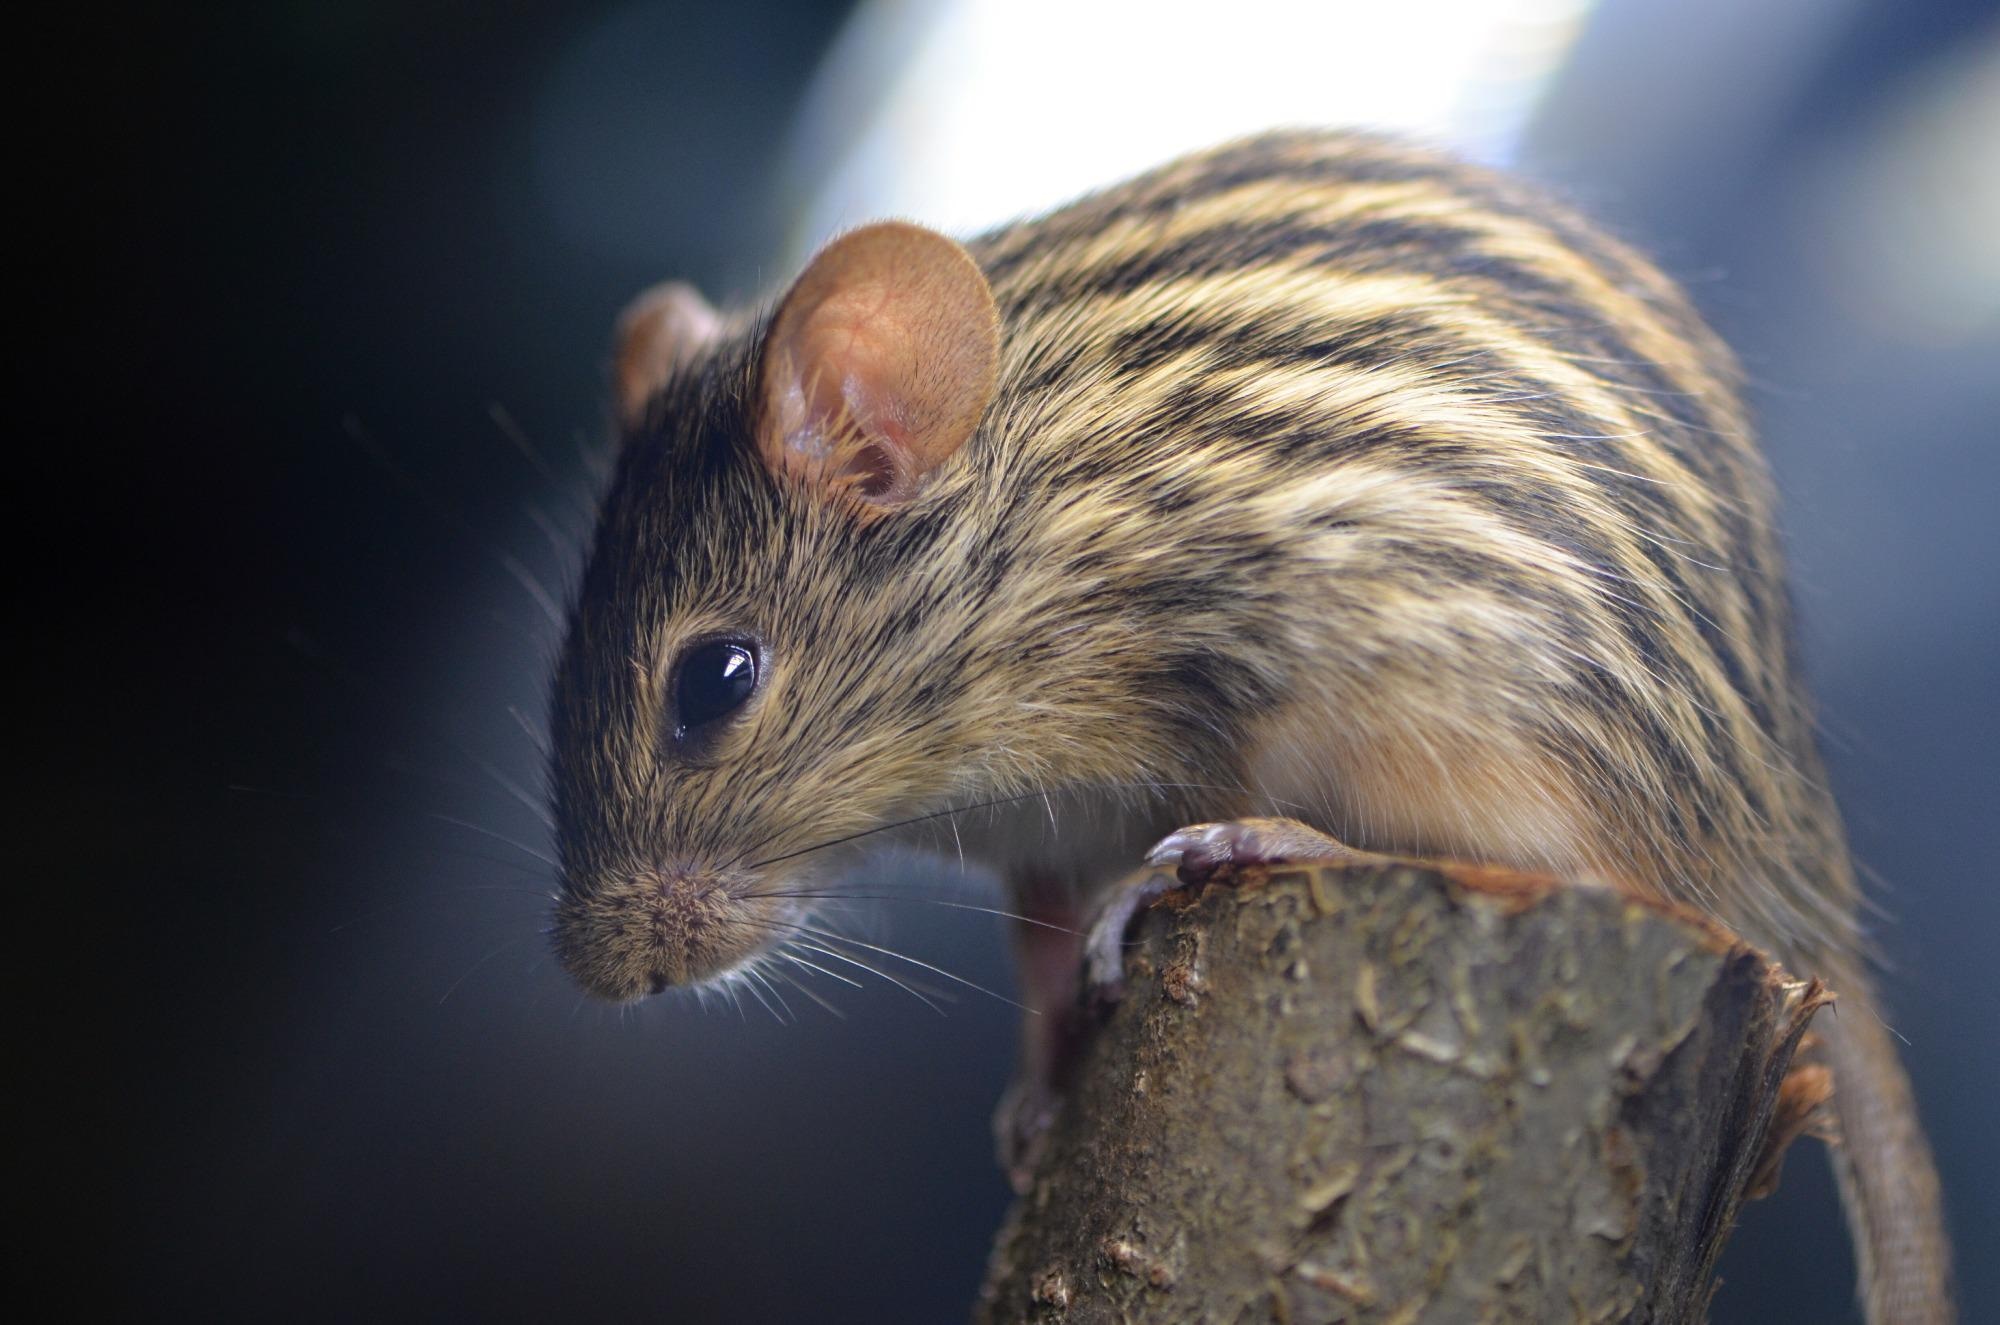 Study: Discovery of novel DNA viruses in small mammals from Kenya. Image Credit: Marek Velechovsky / Shutterstock